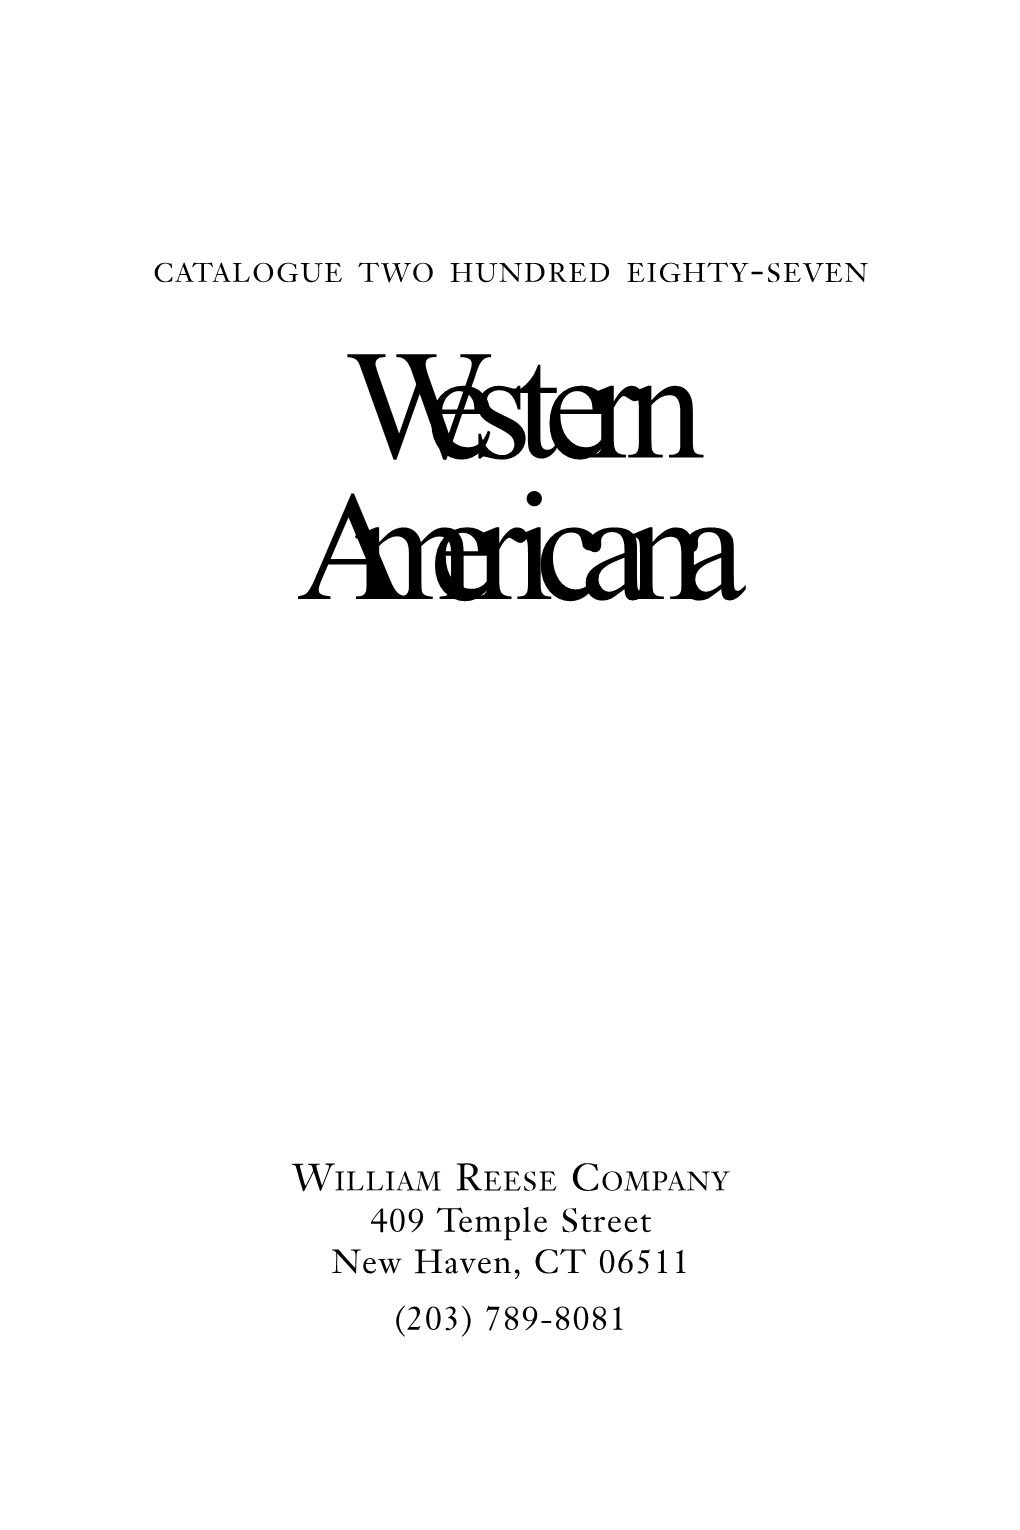 Western Americana